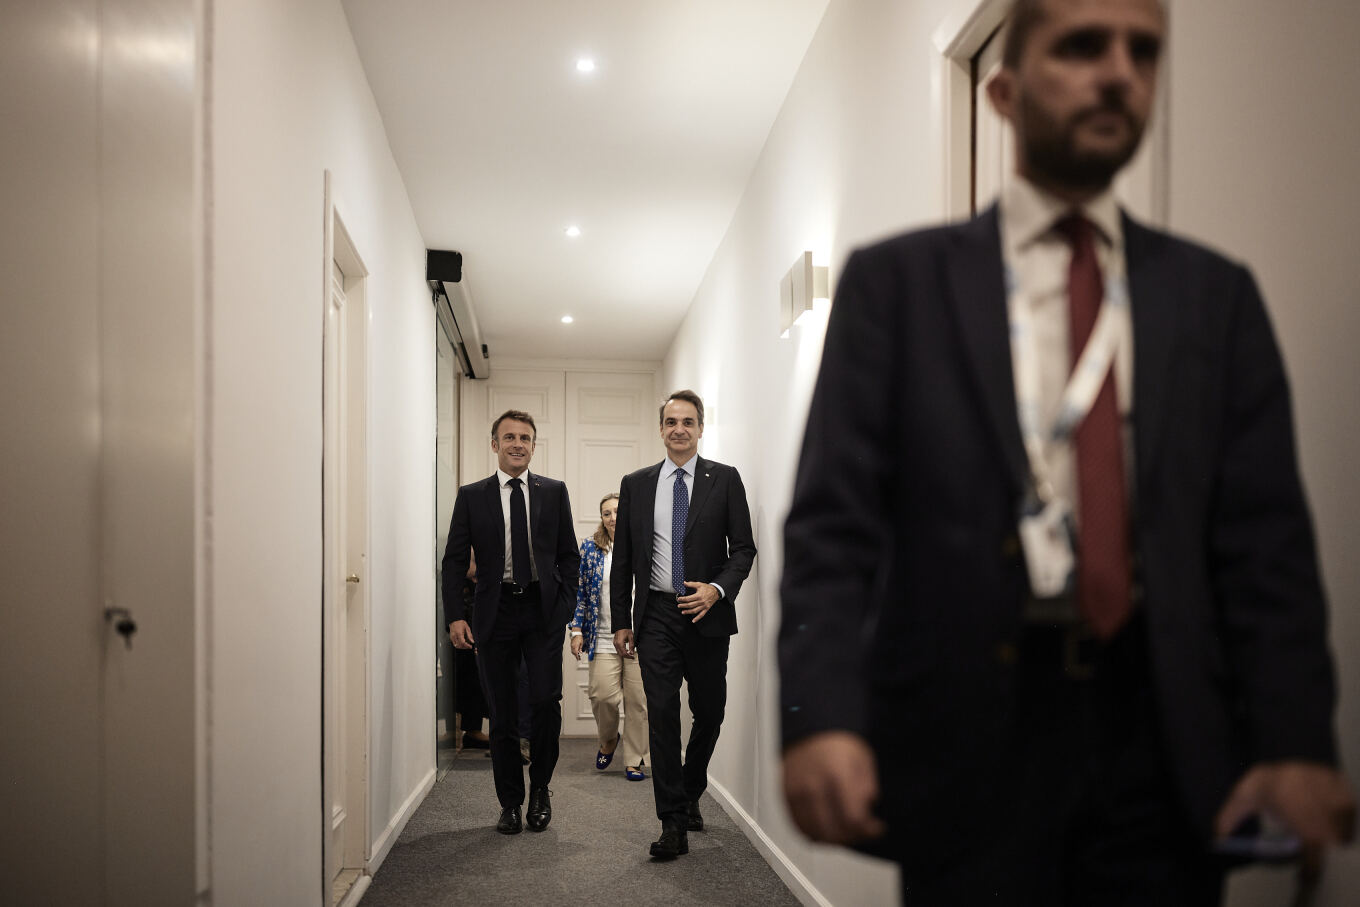 O Έλληνας Πρωθυπουργός και ο Πρόεδρος της Γαλλίας συζήτησαν για το μεταναστευτικό, τις πυρκαγιές και την Κλιματική Αλλαγή στο περιθώριο της Συνόδου Κορυφής της MED9 στη Μάλτα.